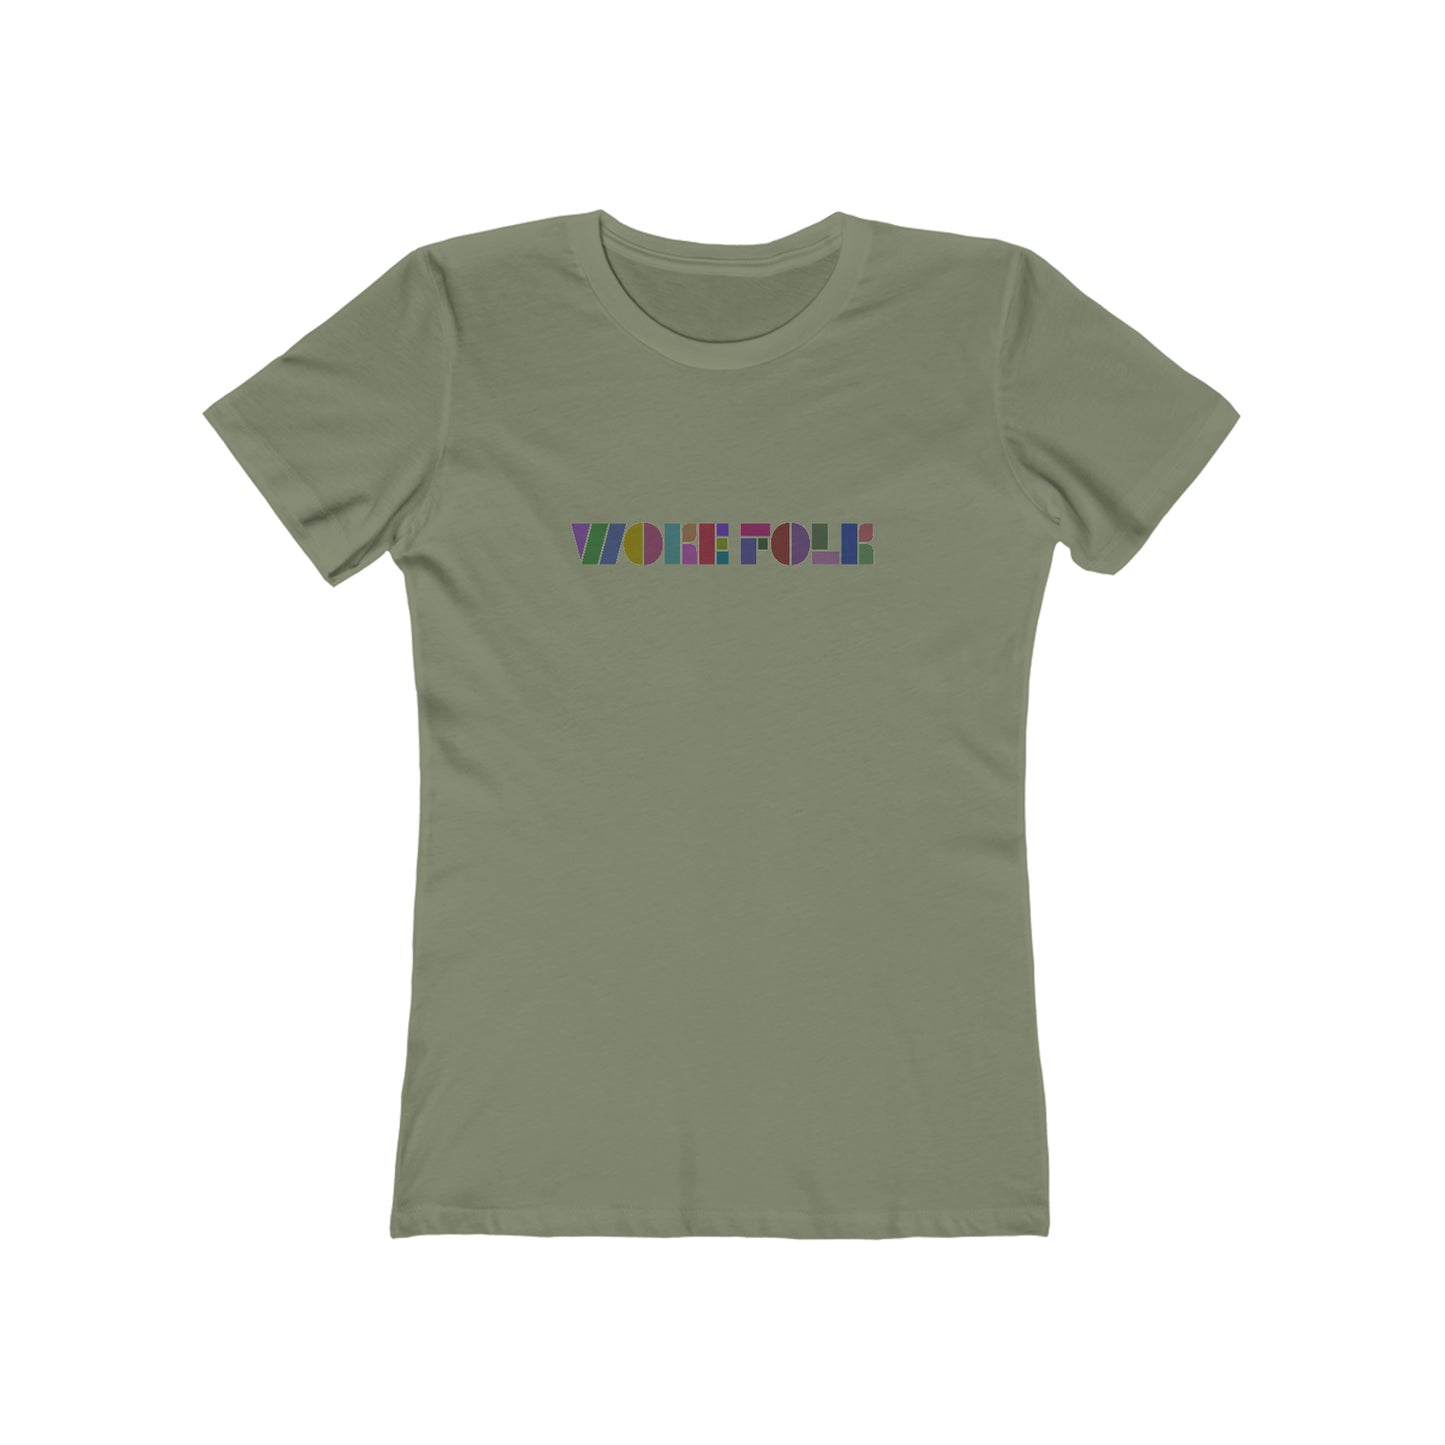 Woke Folk - Women's T-Shirt